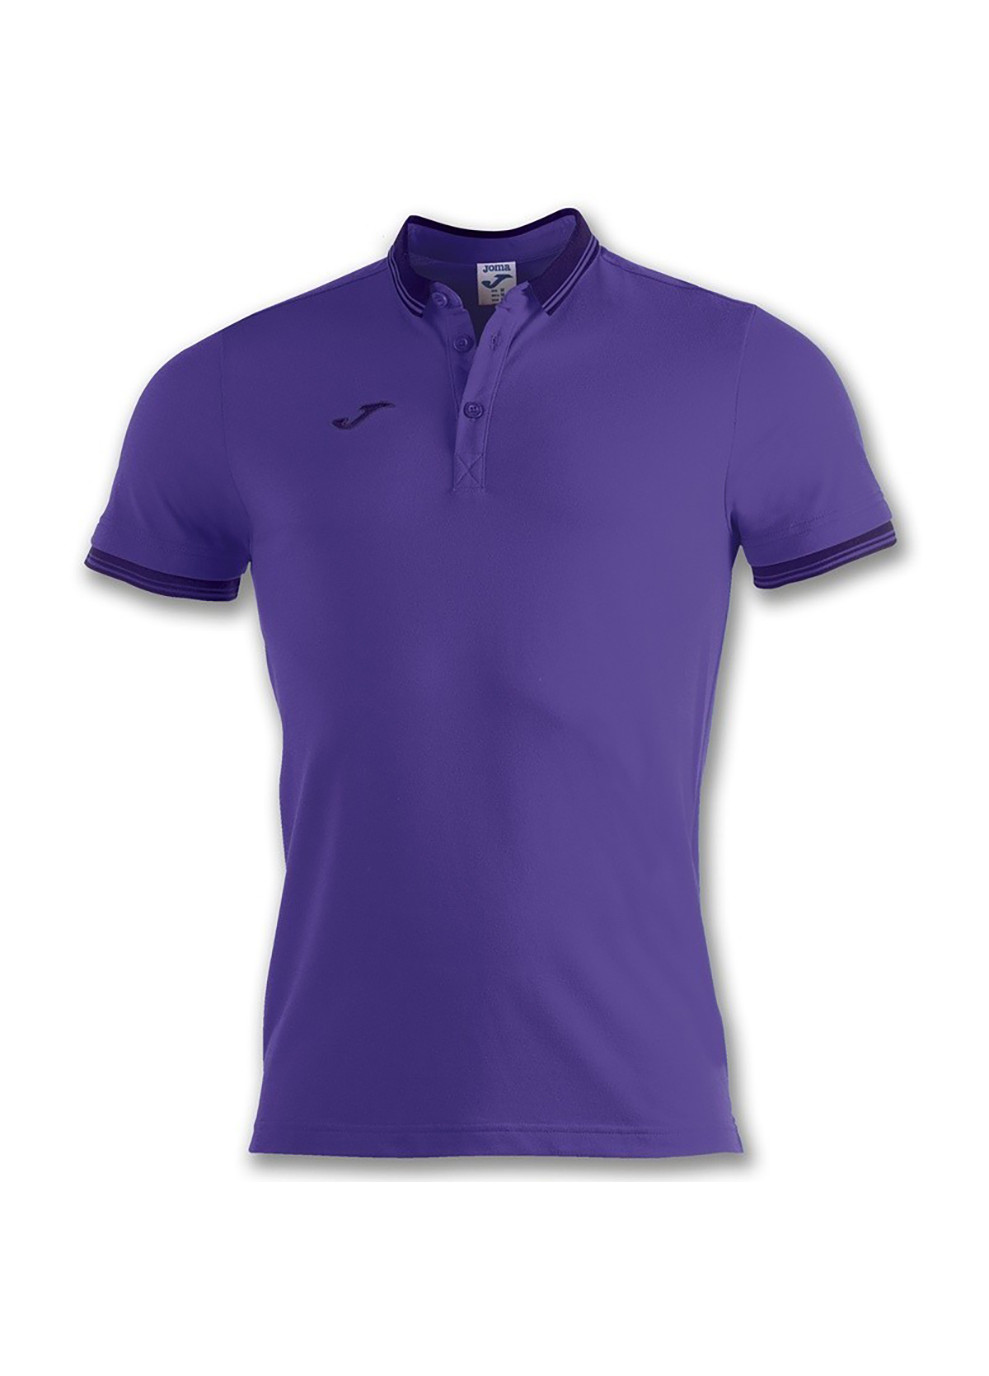 Фиолетовая футболка-поло polo shirt bali ii purple s/s фиолетовый для мужчин Joma